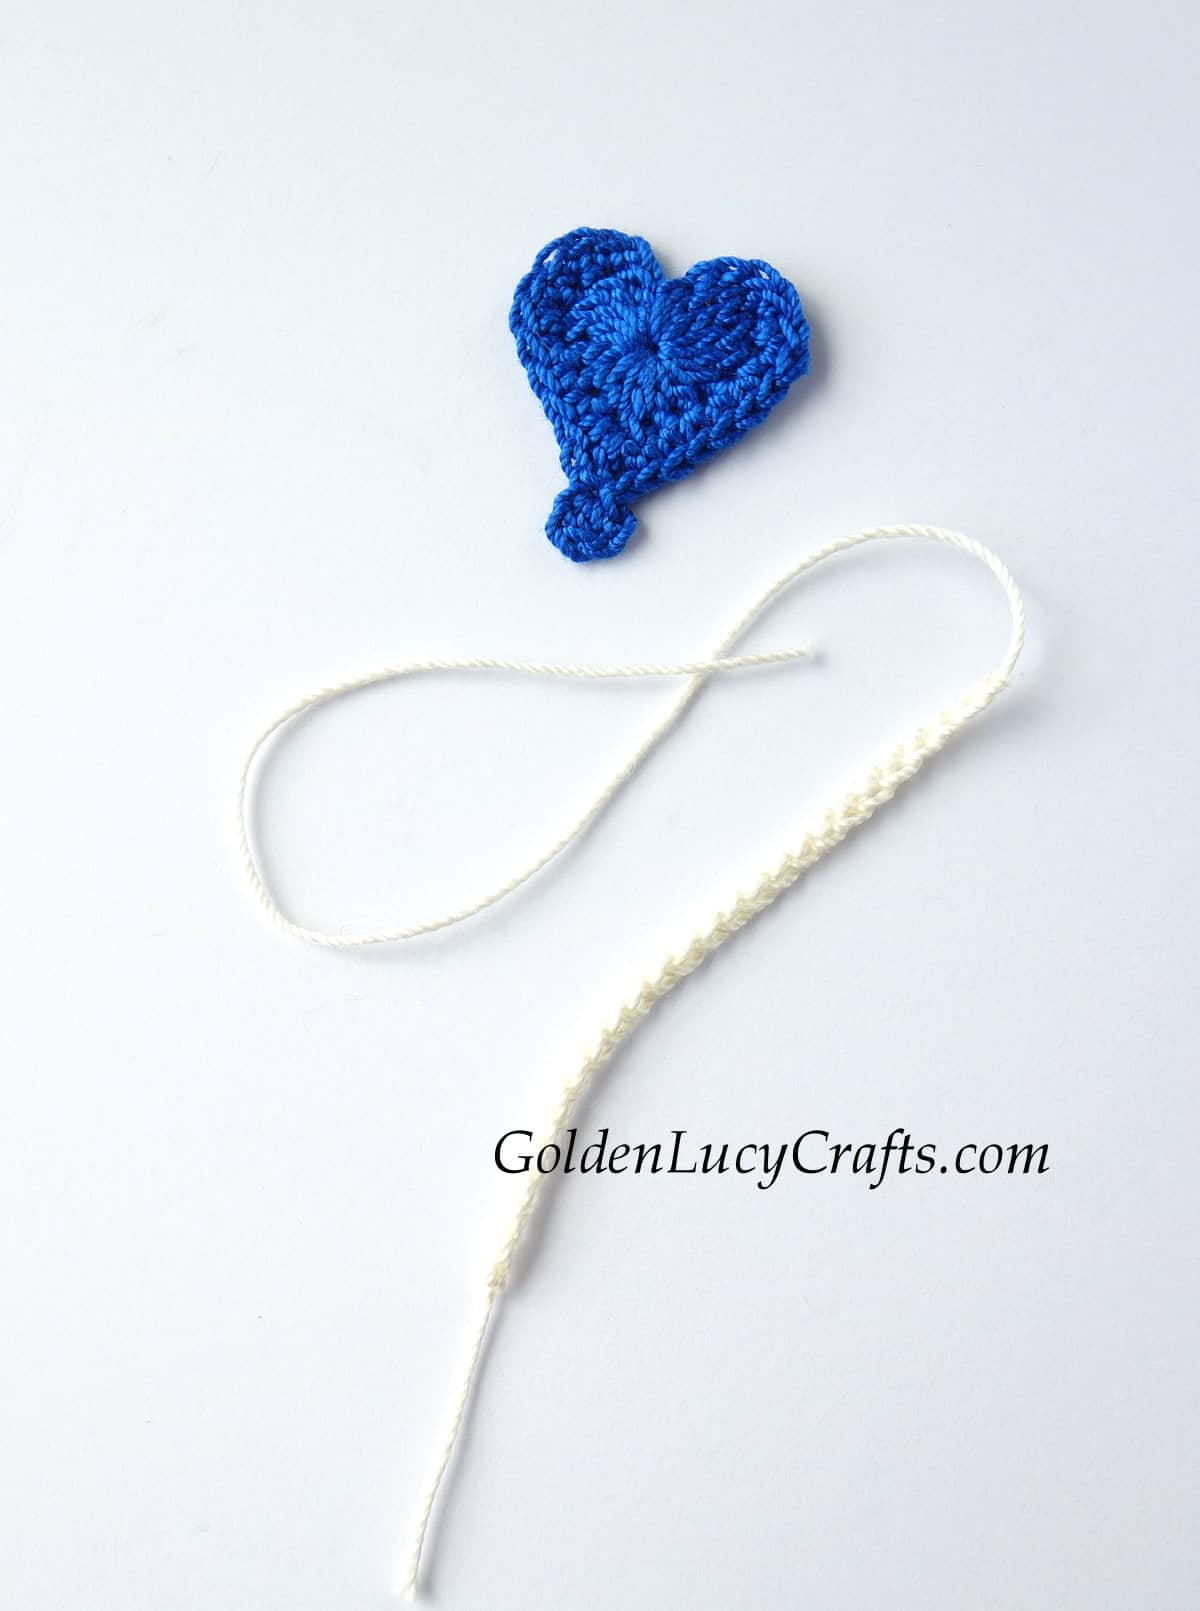 Parts of crocheted heart balloon.